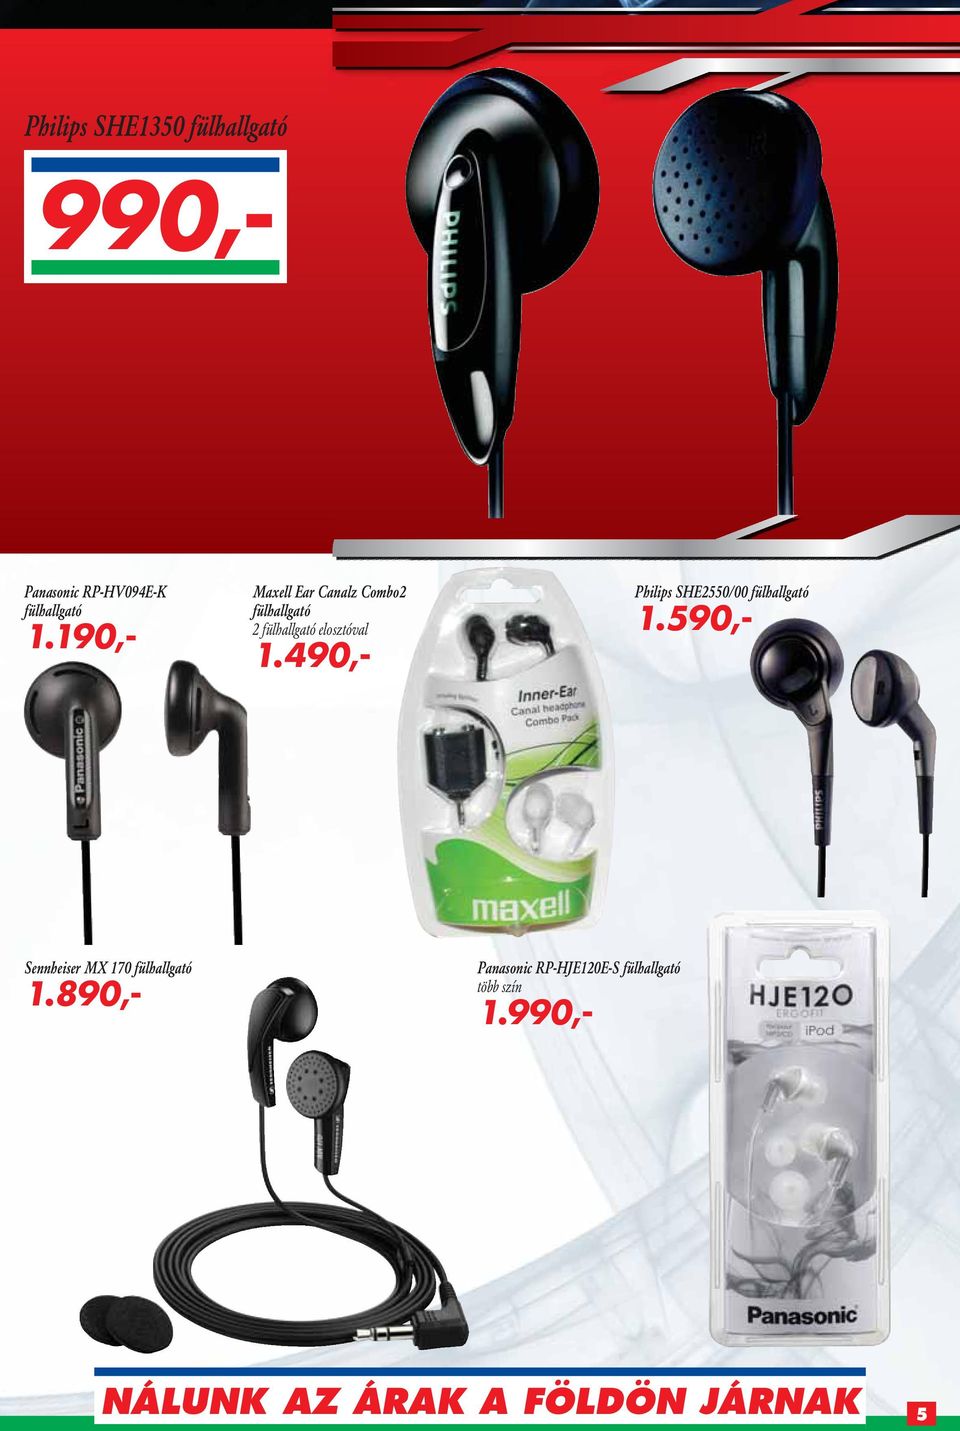 490,- Philips SHE2550/00 fülhallgató 1.590,- Sennheiser MX 170 fülhallgató 1.